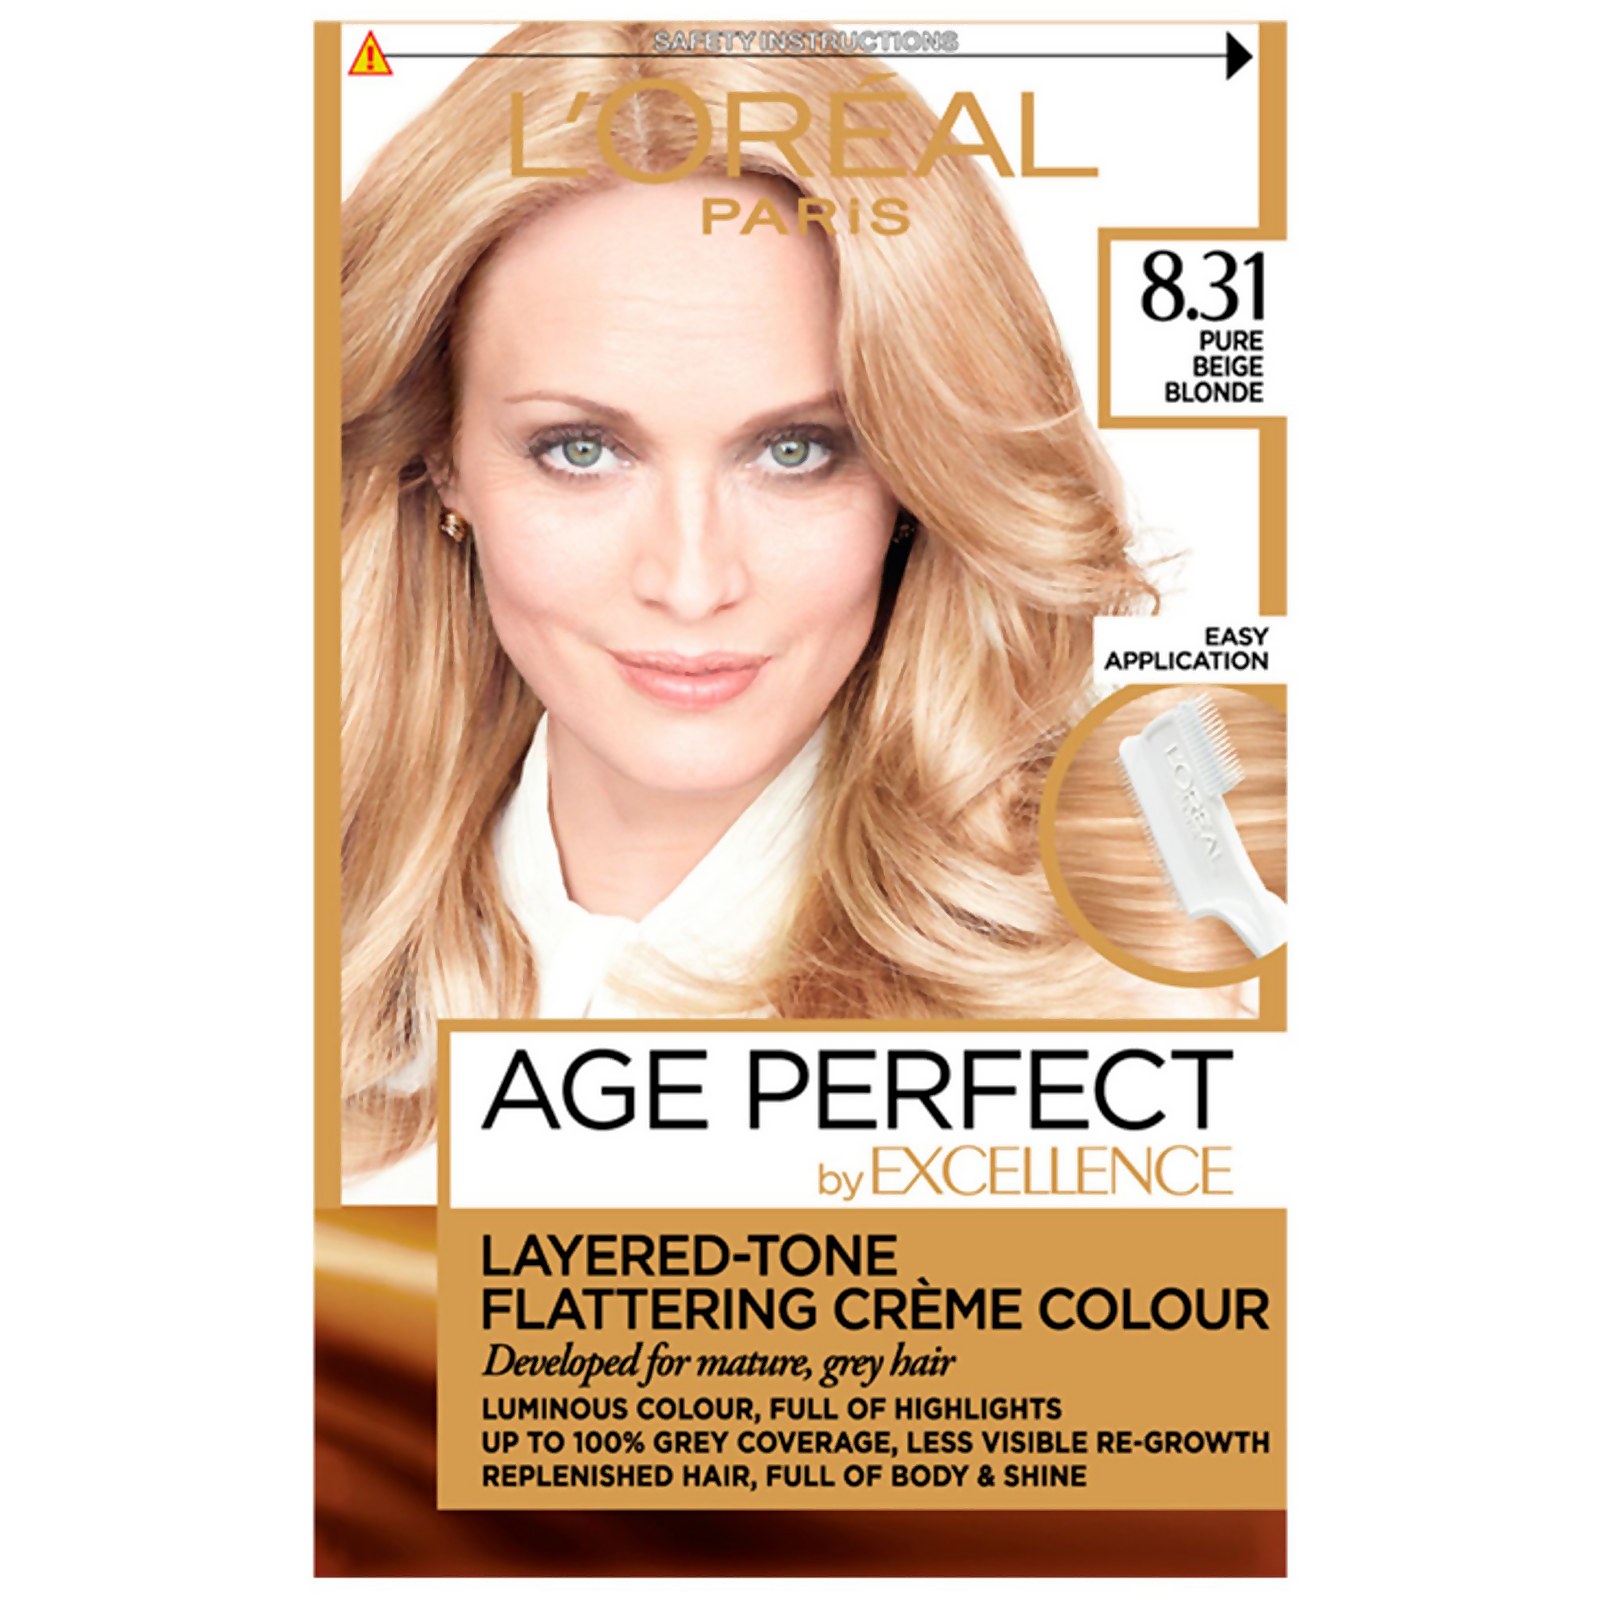 L'Oréal Paris Age Perfect Hair Dye (Various Shades) - 8.31 Pure Beige Blonde